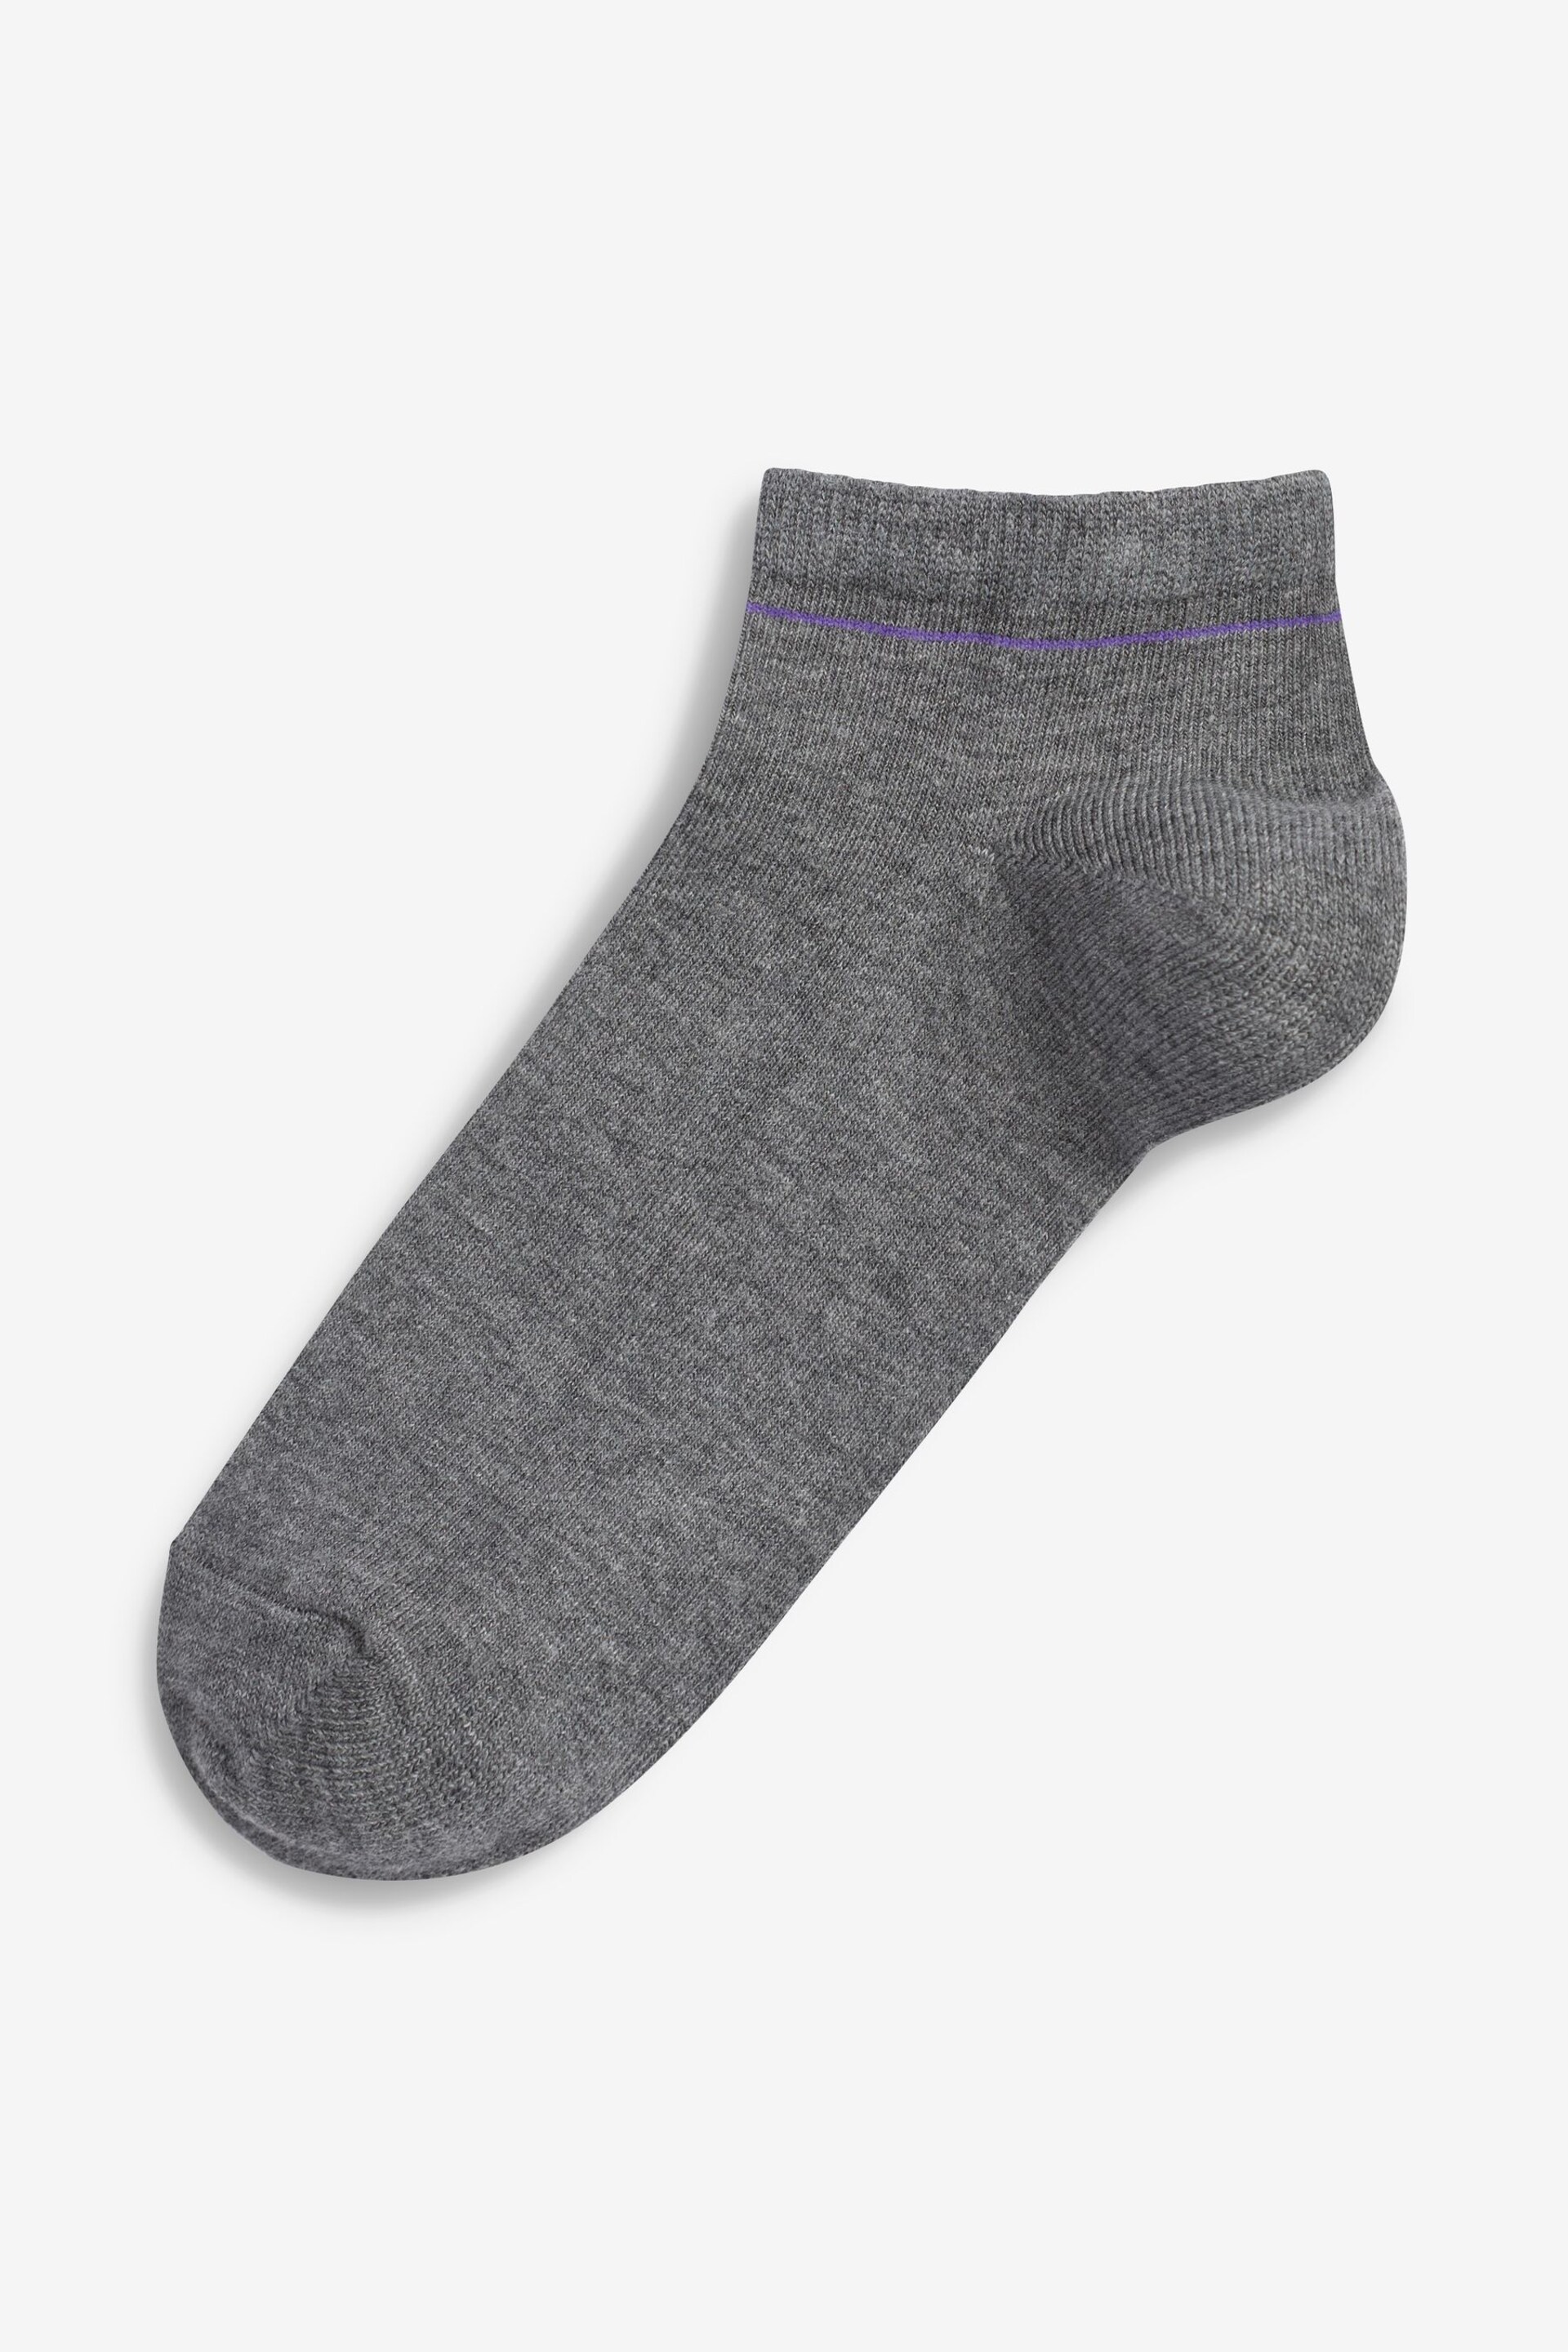 Grey Modal Trainer Socks 4 Pack - Image 5 of 5